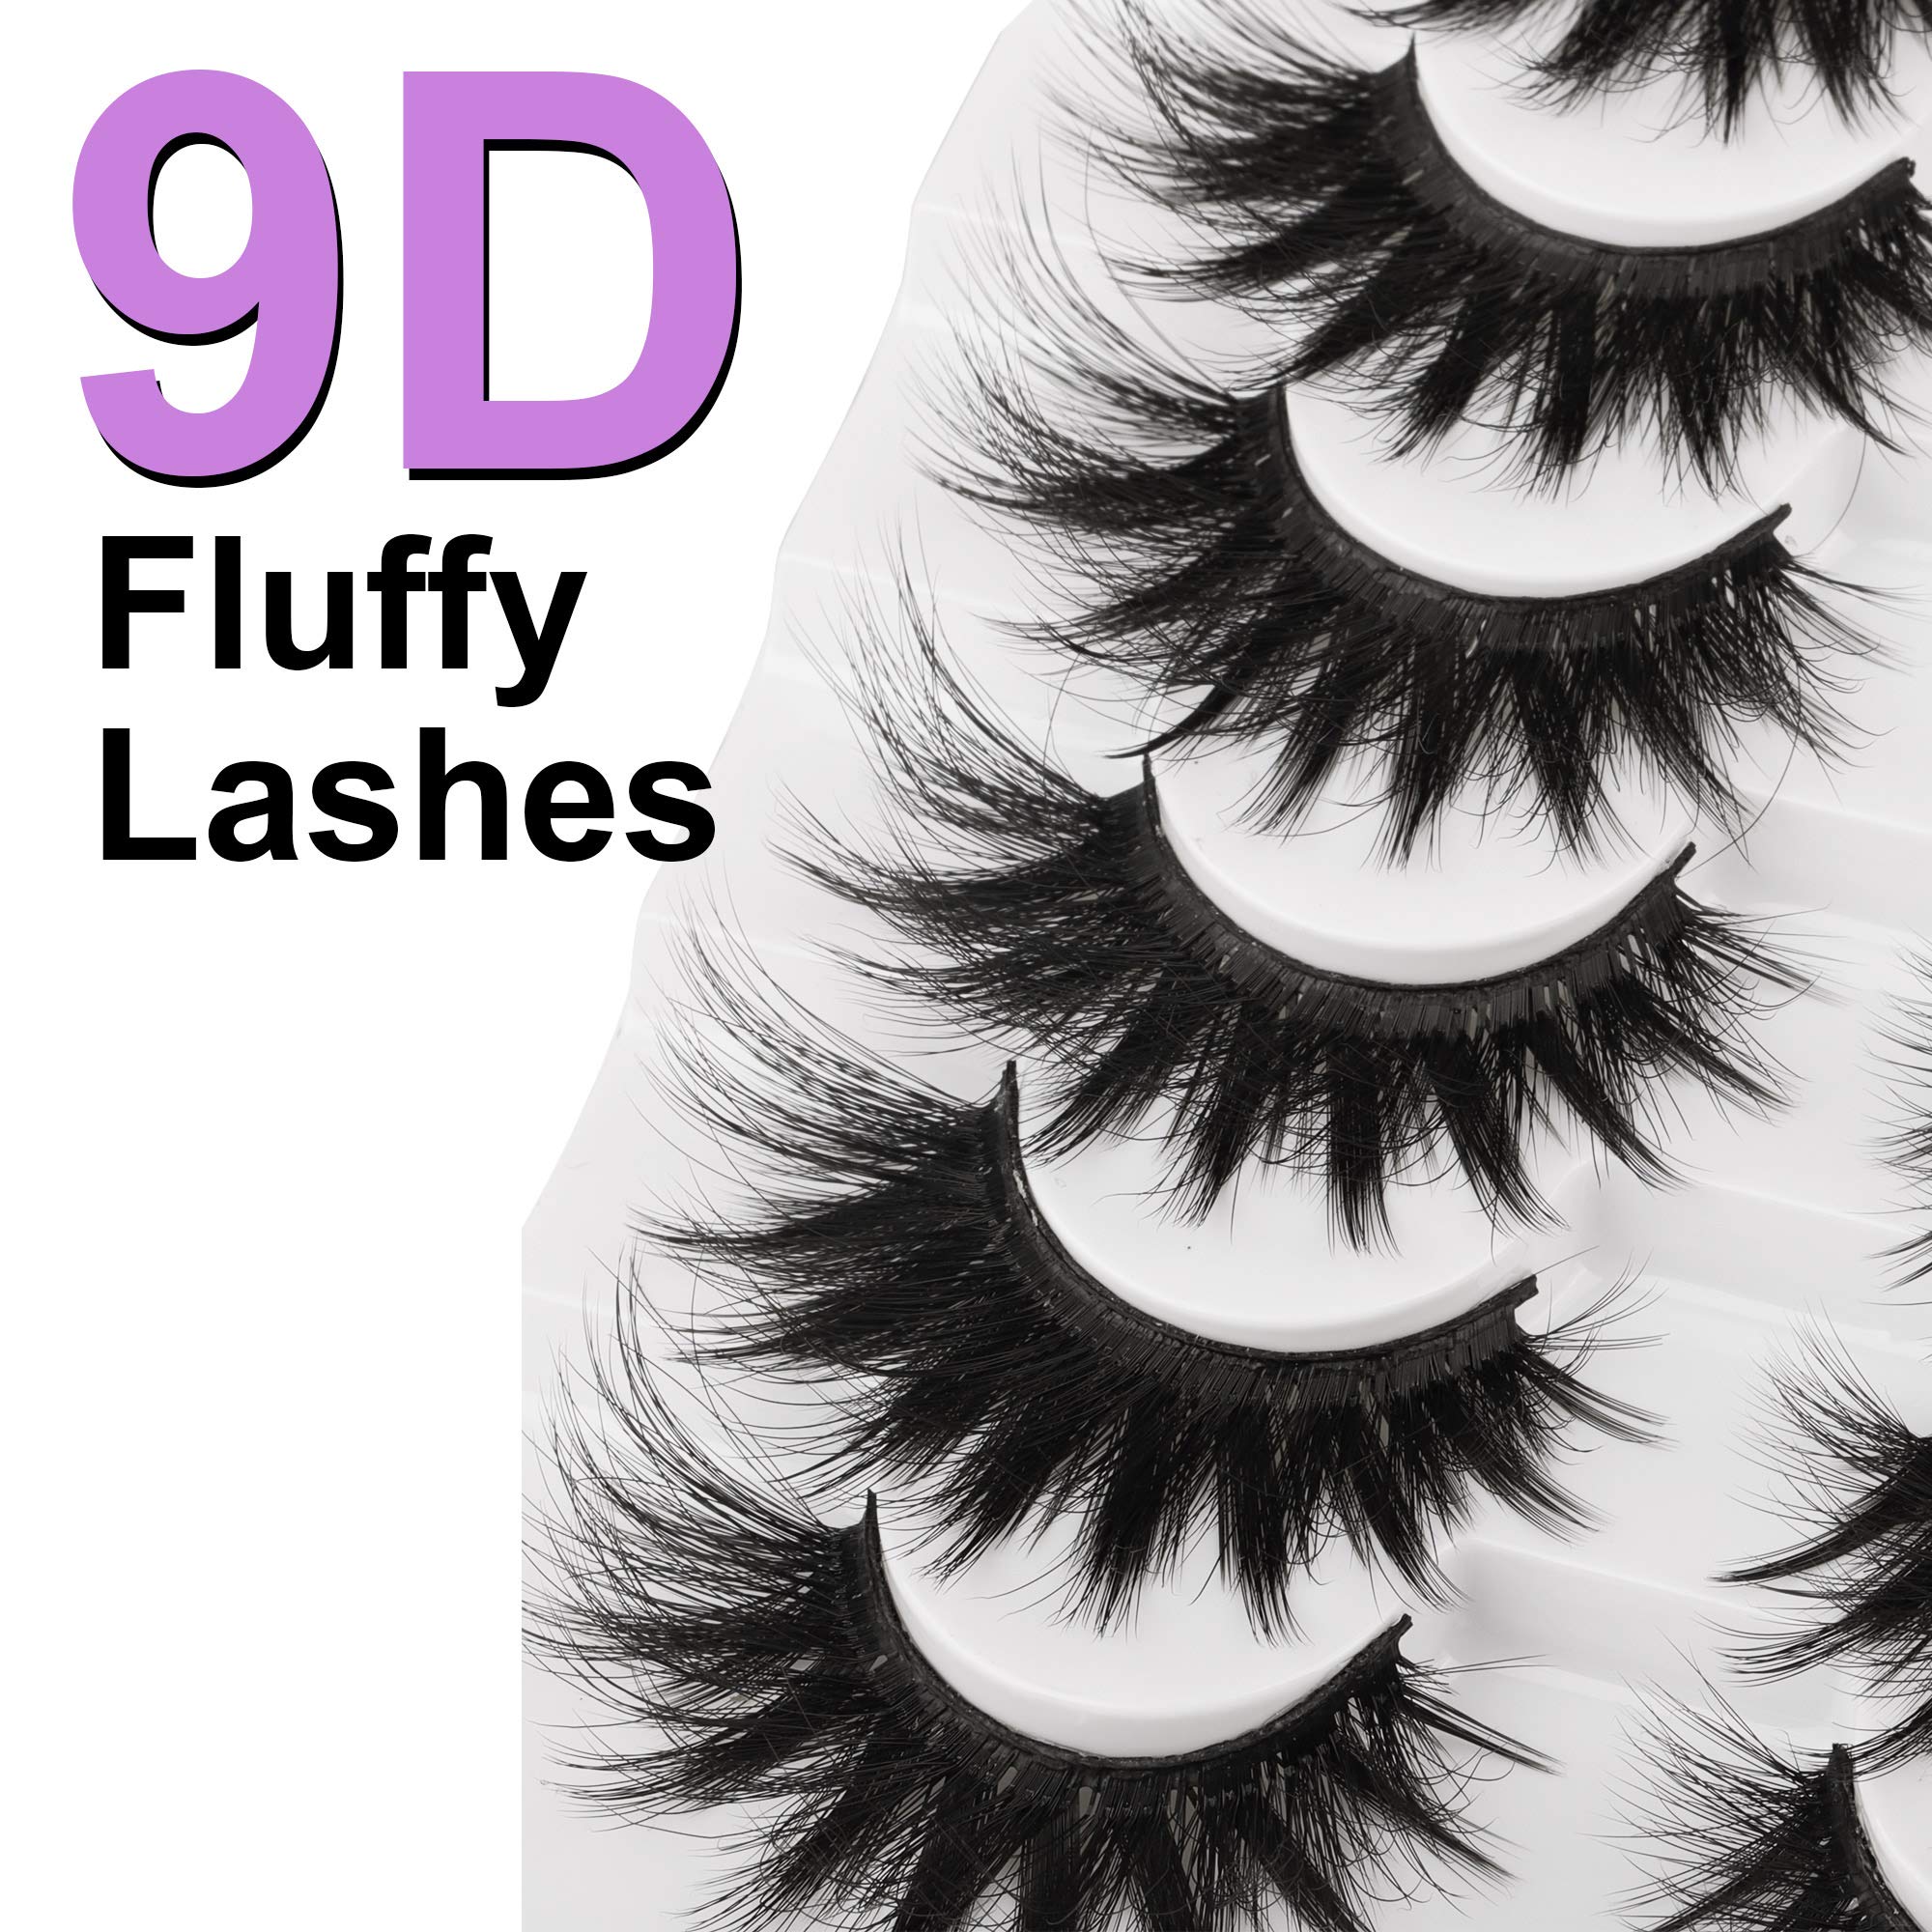 False Eyelashes Fluffy Mink Lashes 20MM Long False Lashes 9D Cat-eye Volume Faux Mink Lashes Pack 8 Pairs by FANXITON